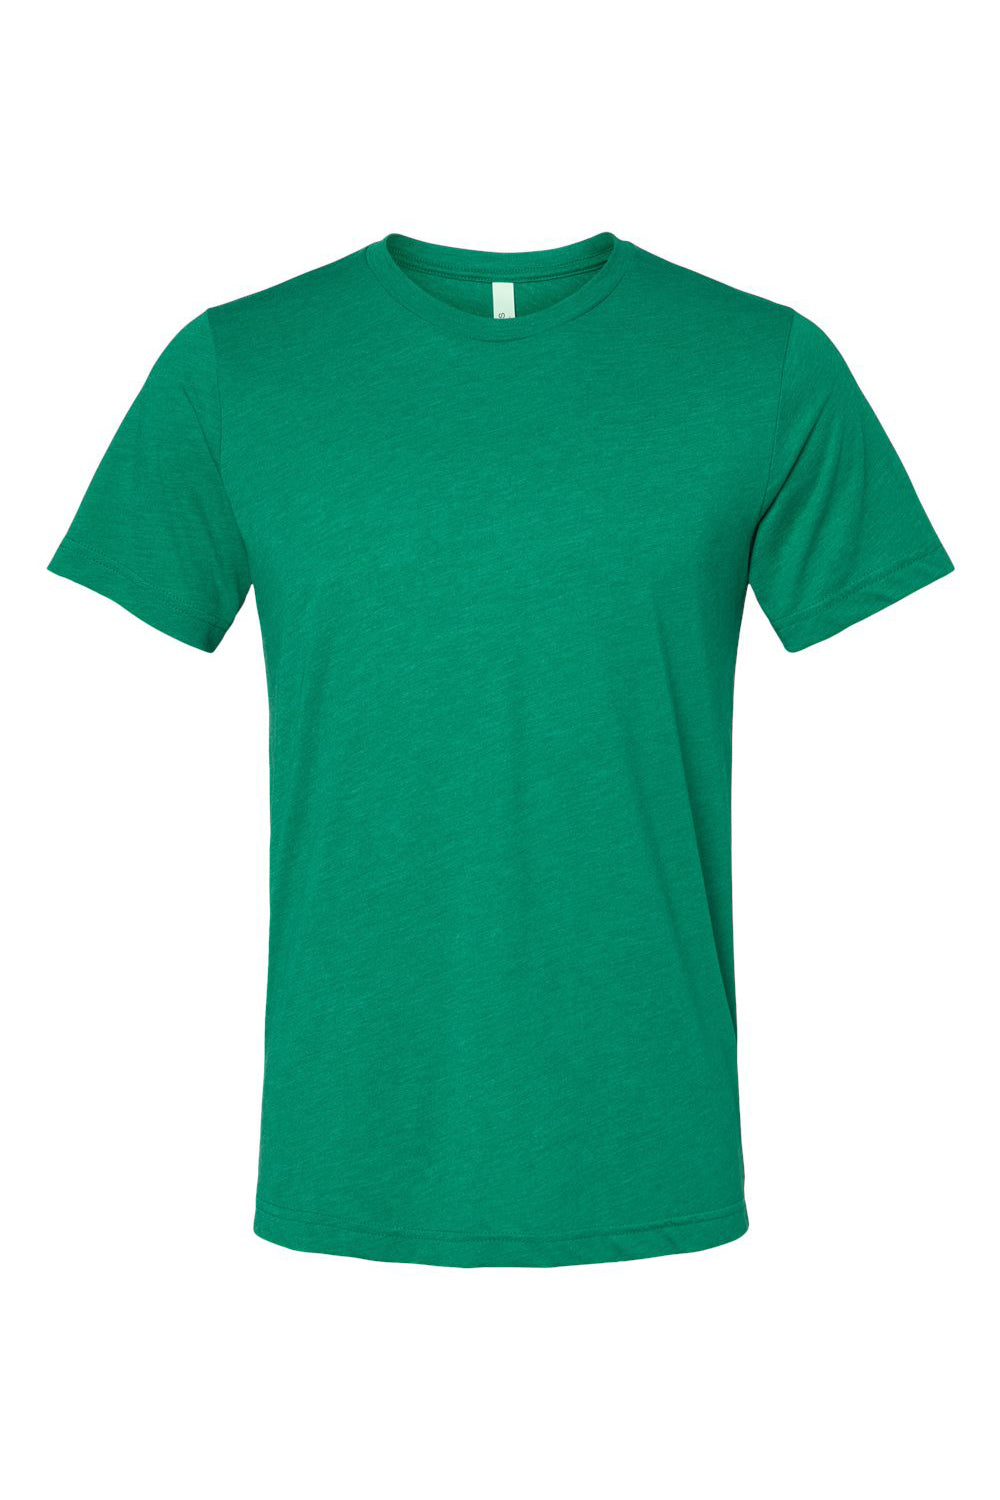 Bella + Canvas BC3413/3413C/3413 Mens Short Sleeve Crewneck T-Shirt Kelly Green Flat Front